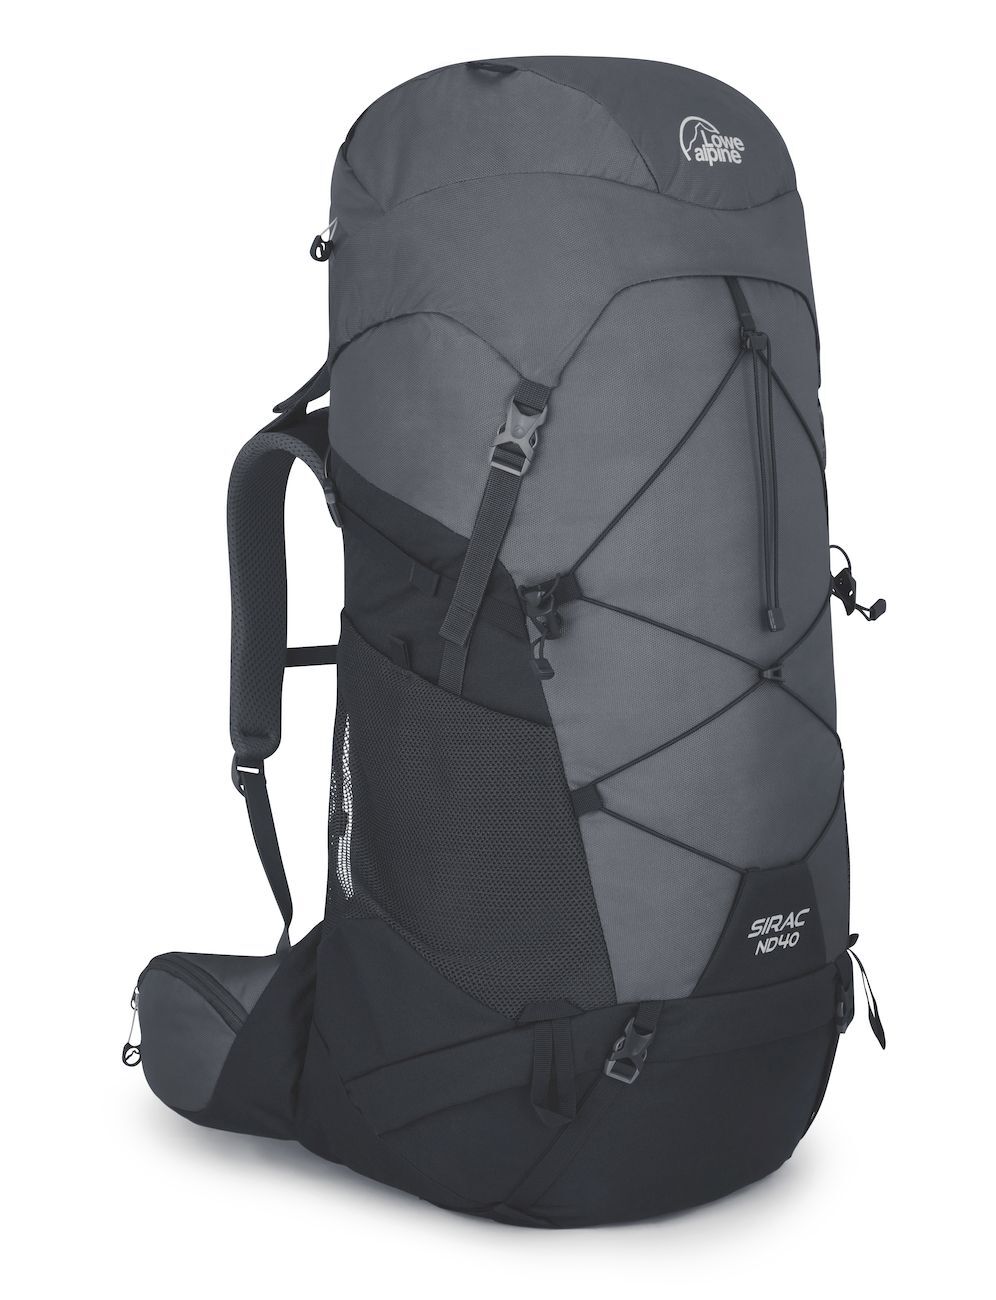 Lowe Alpine Sirac ND40 - Walking backpack - Women's